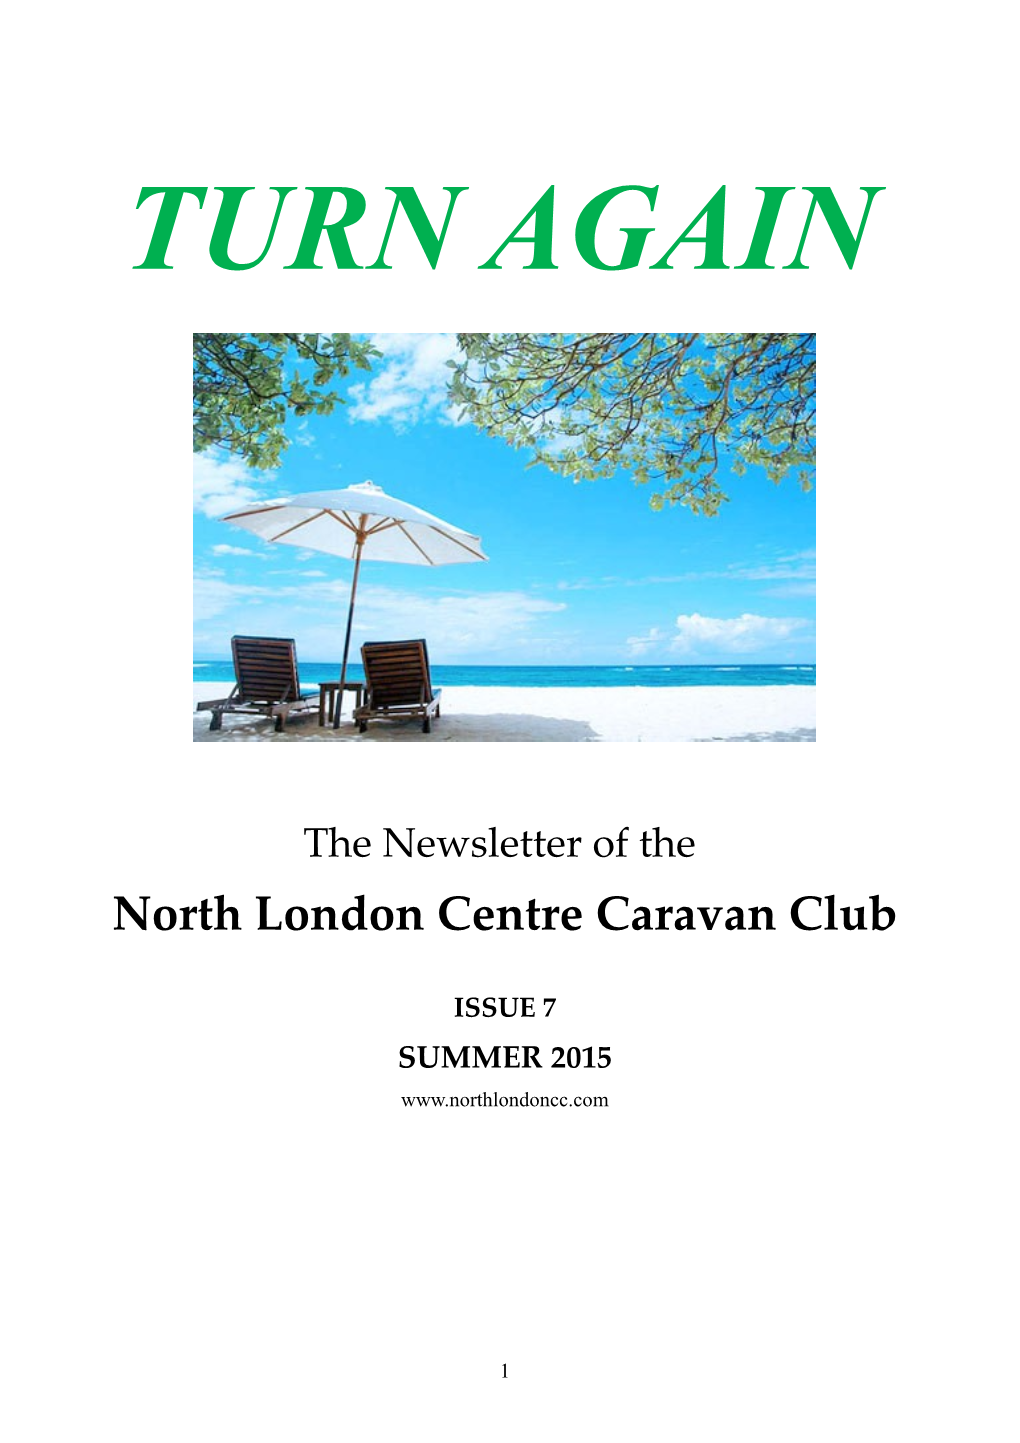 North Londoncentre Caravan Club